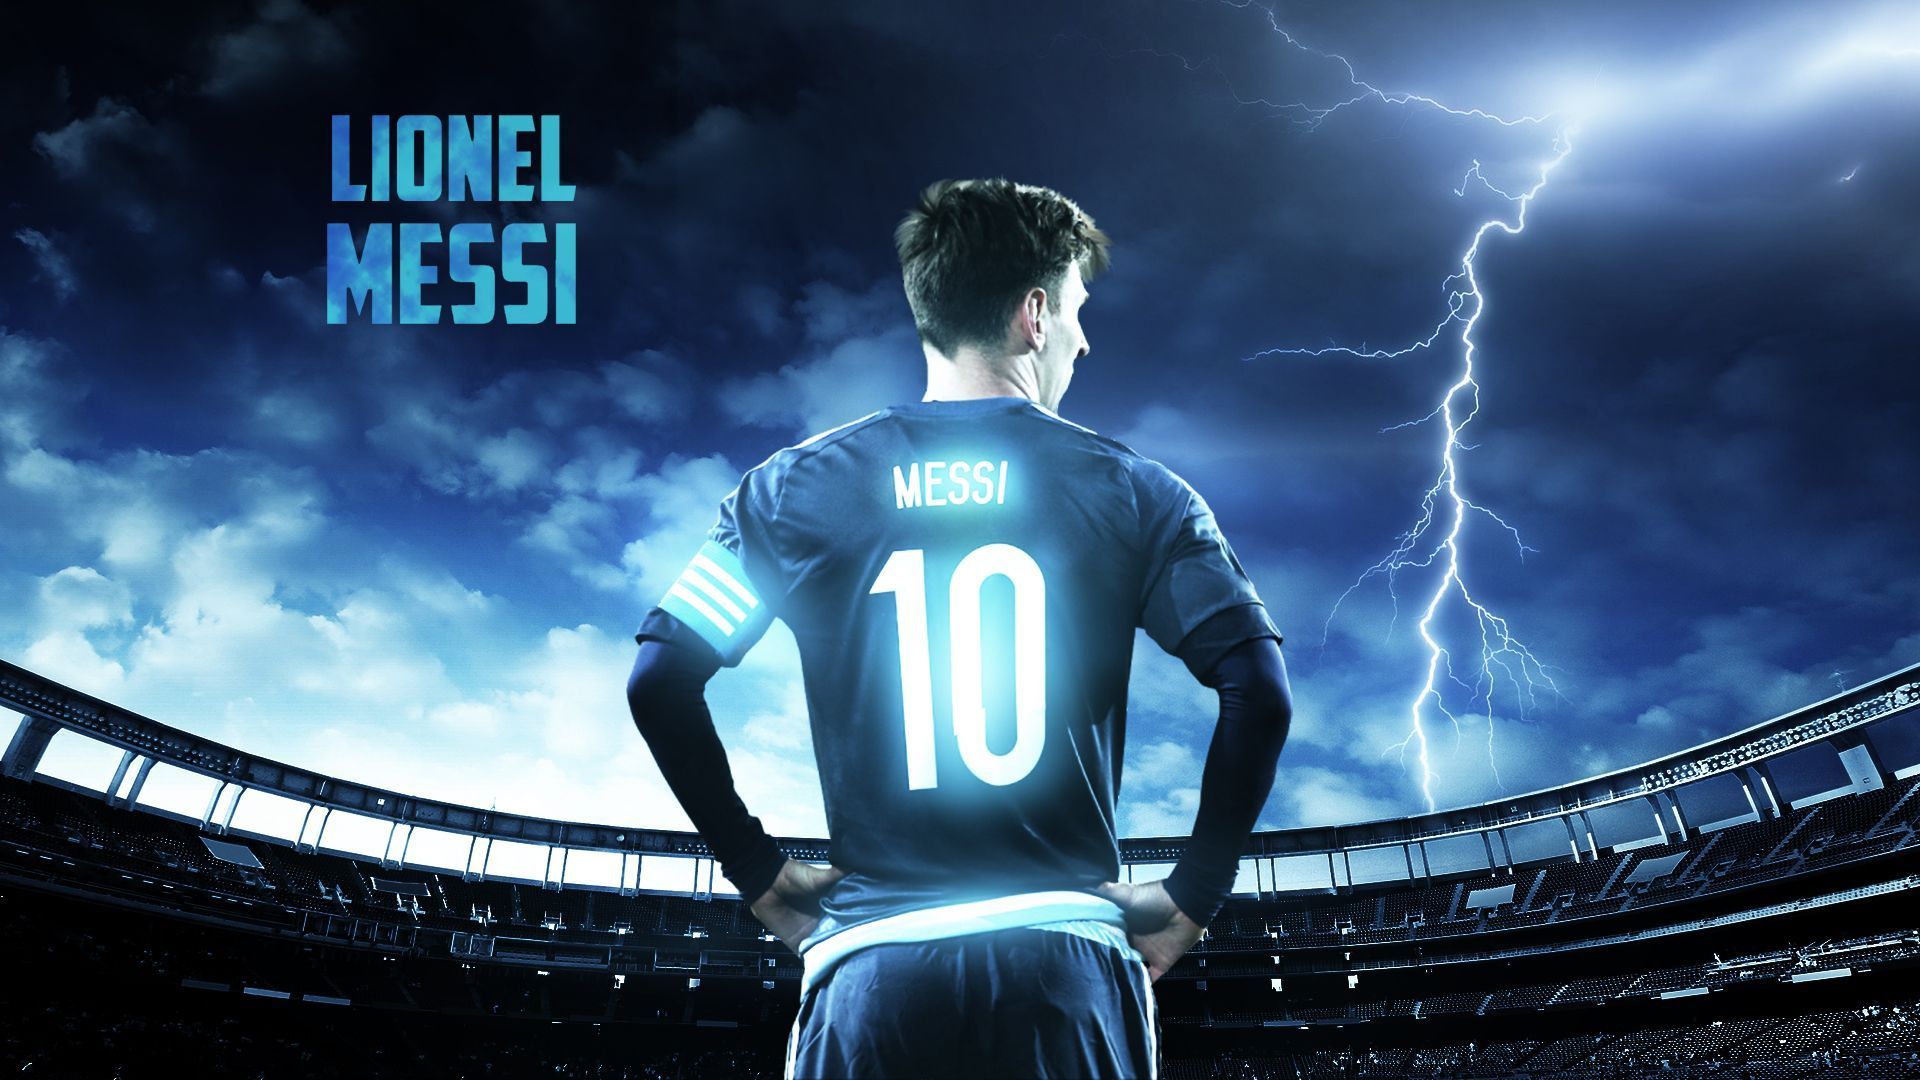 Messi Desktop Background Wallpapers, Backgrounds, Images, Art